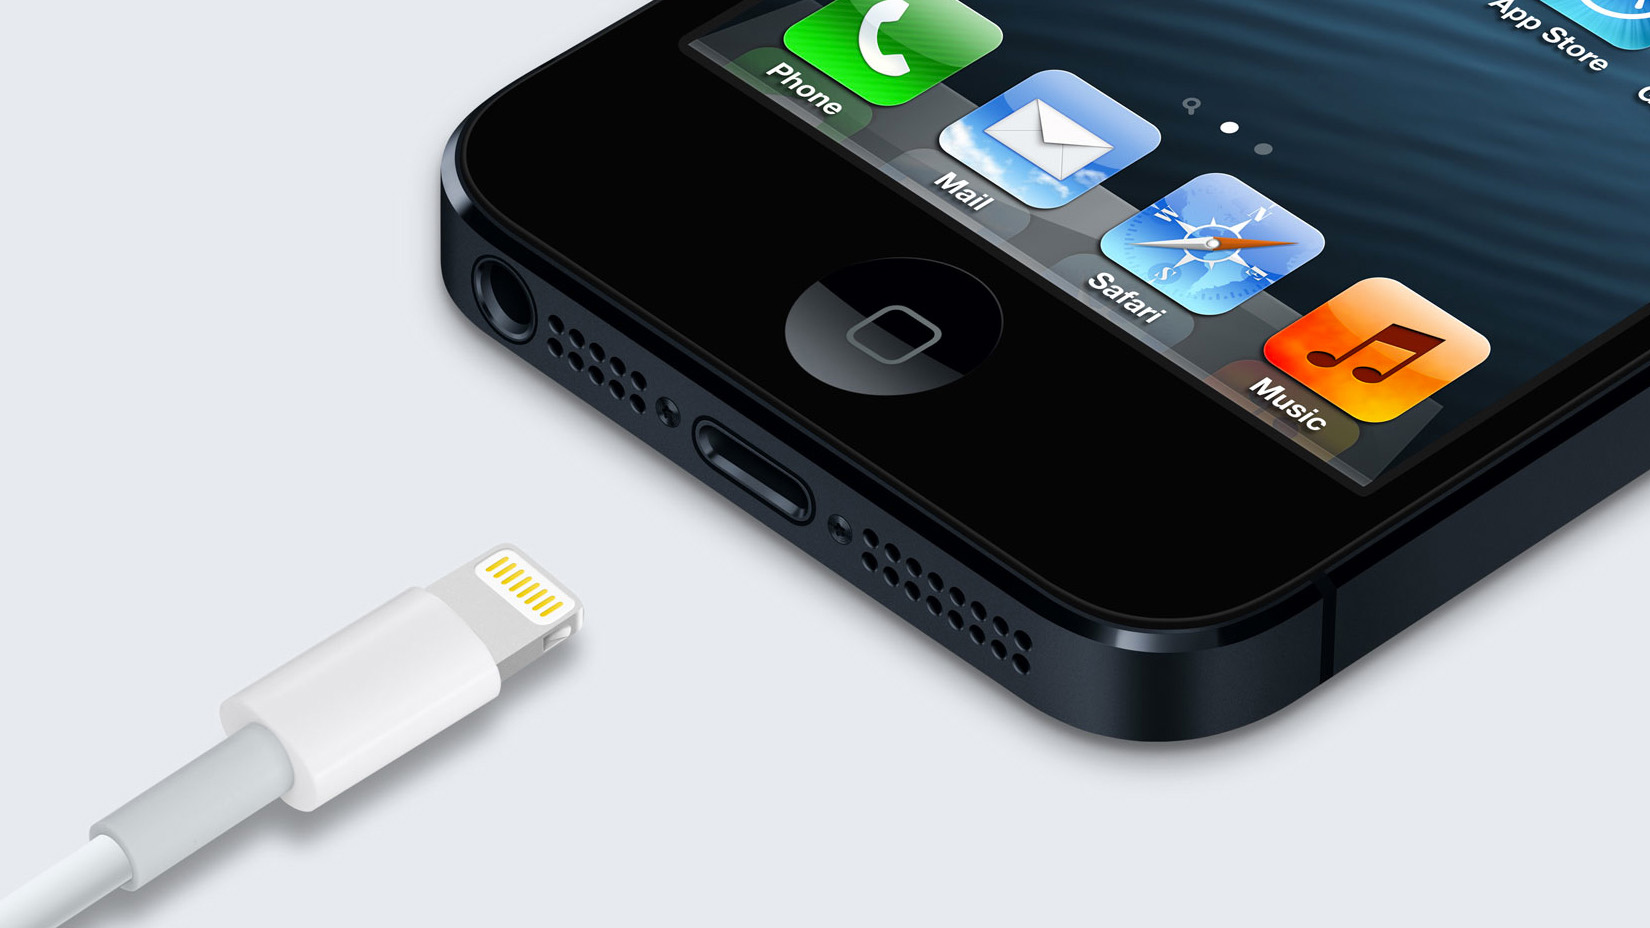 Cargador Coche Lightning iPhone/iPad IOS 10 Biwond > Smartphones >  Accesorios Smartphones > Accesorios iPhone 5/5C/5S > Accesorios iPhone